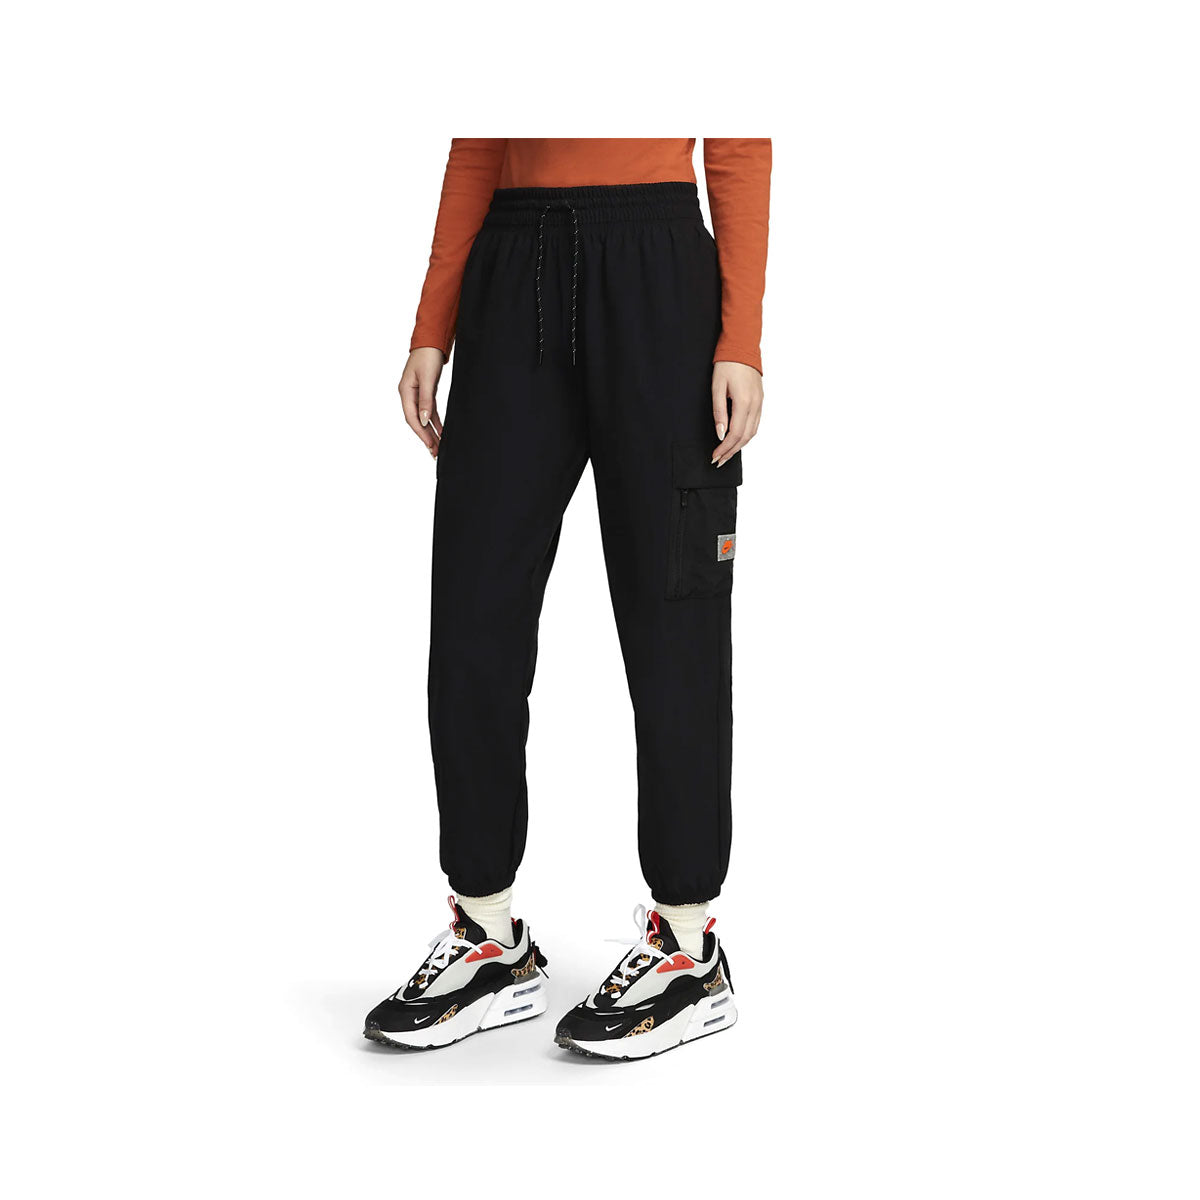 Nike Women's Sports Utility Woven Cargo Pants